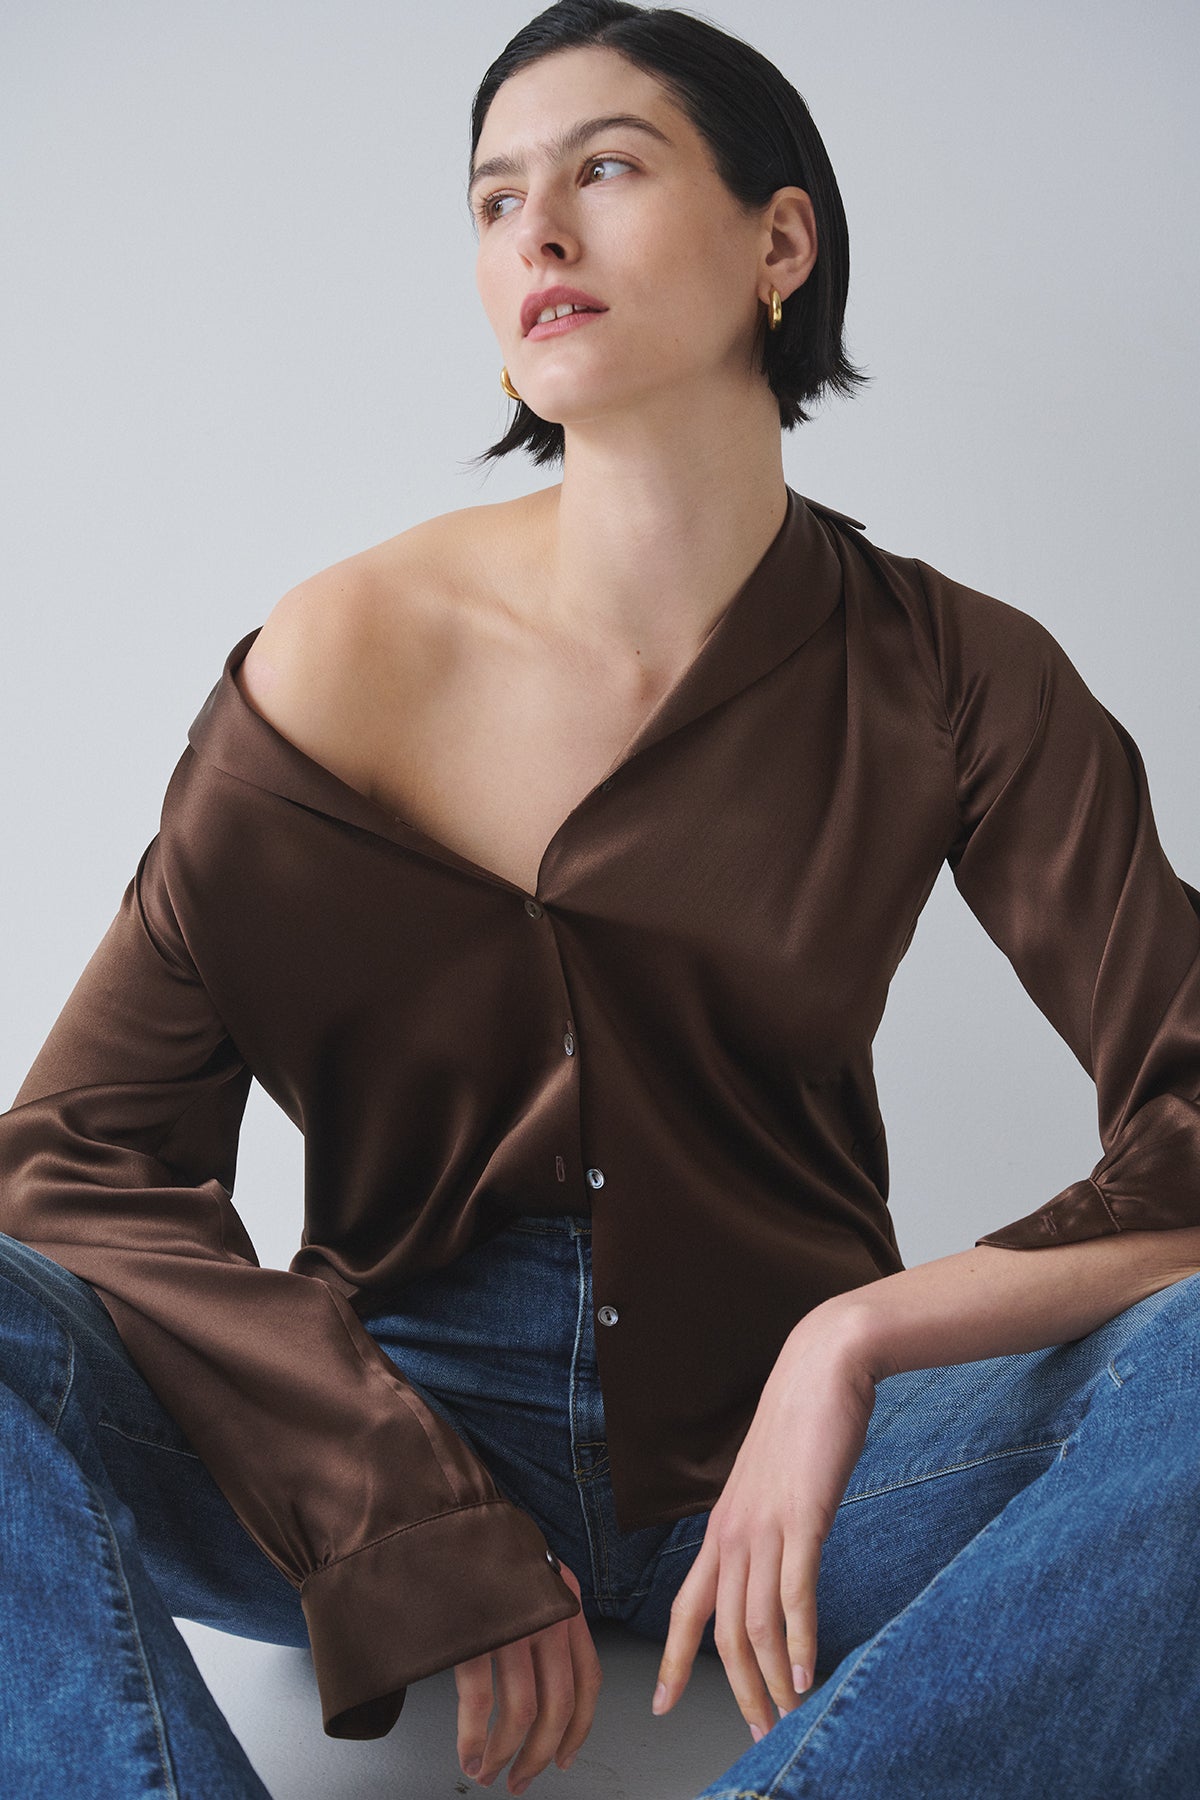 A model wearing a timeless SOHO TOP silk charmeuse blouse by Velvet by Jenny Graham.-35547968438465